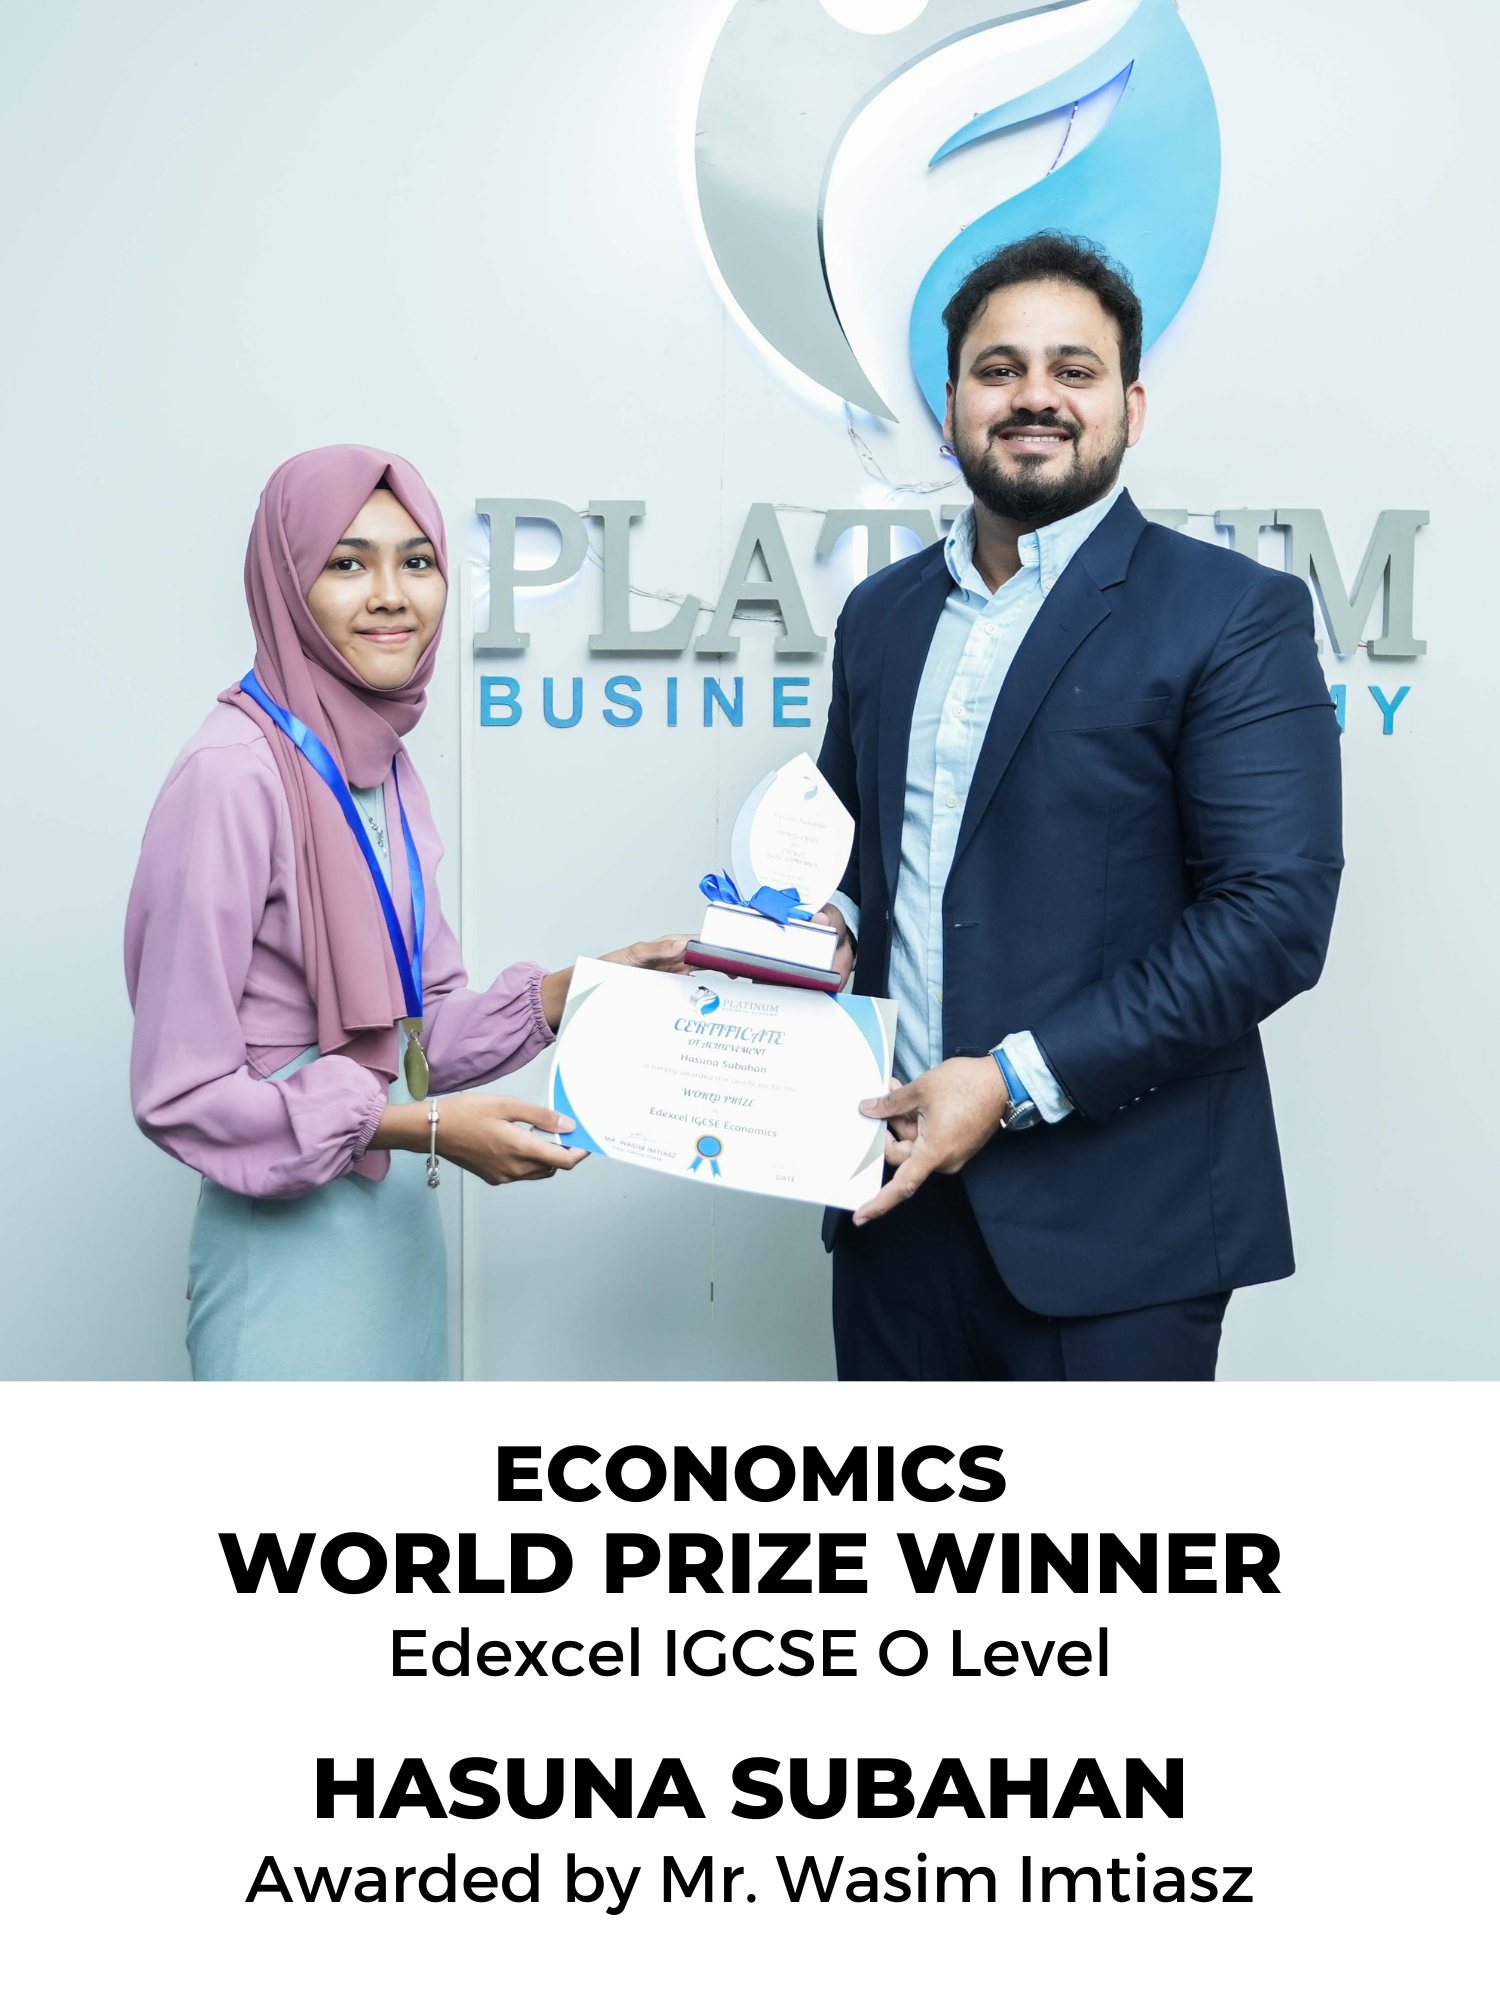 Edexcel O'Level Economics World Prize Winner: Hasuna Subahan
Lecturer: Mr. Wasim Imtiasz